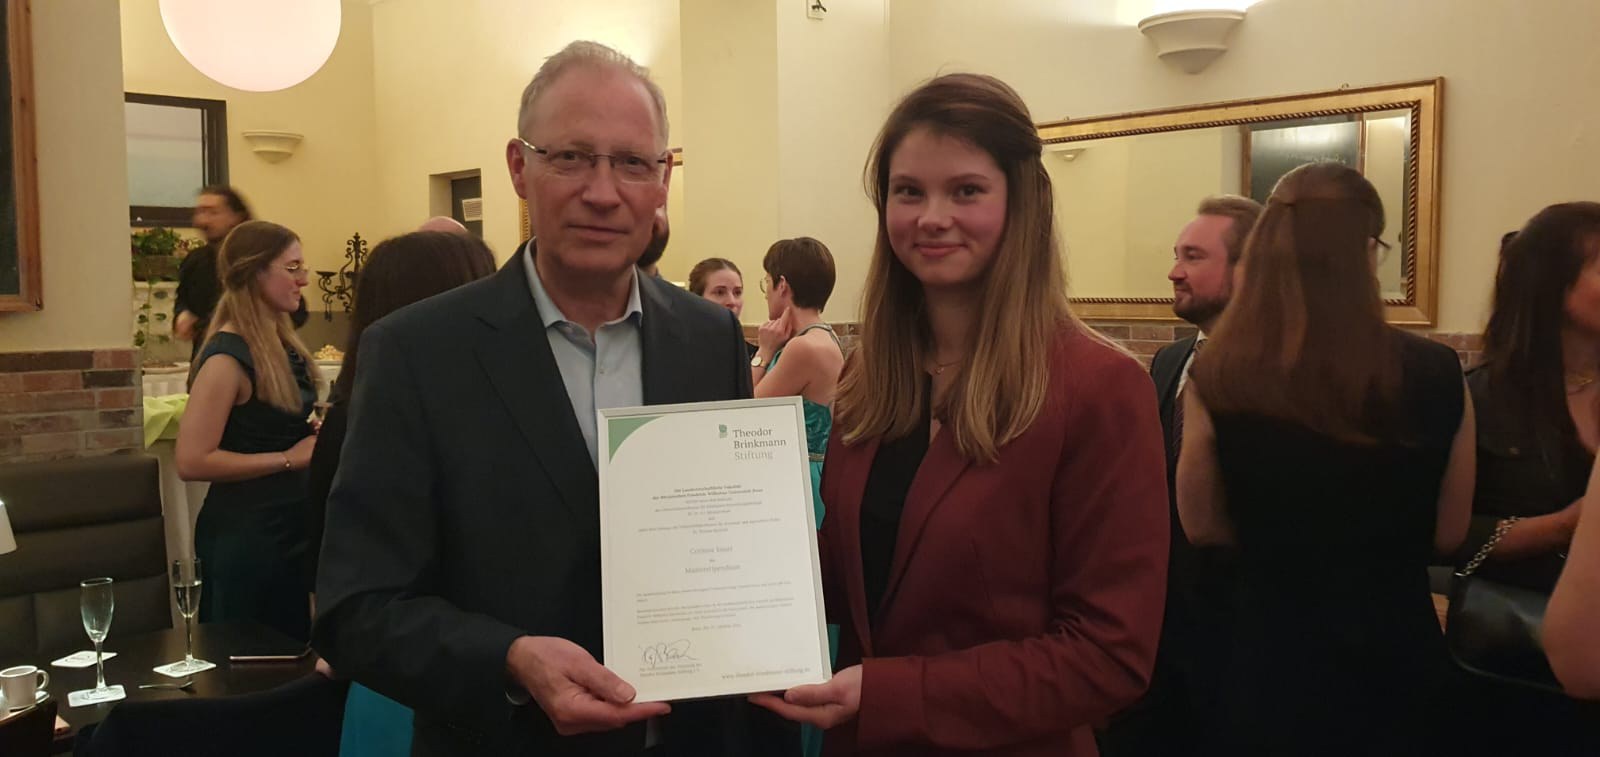 Dr. Hermann-Josef Baaken hands over the certificate to Corinna Sauer